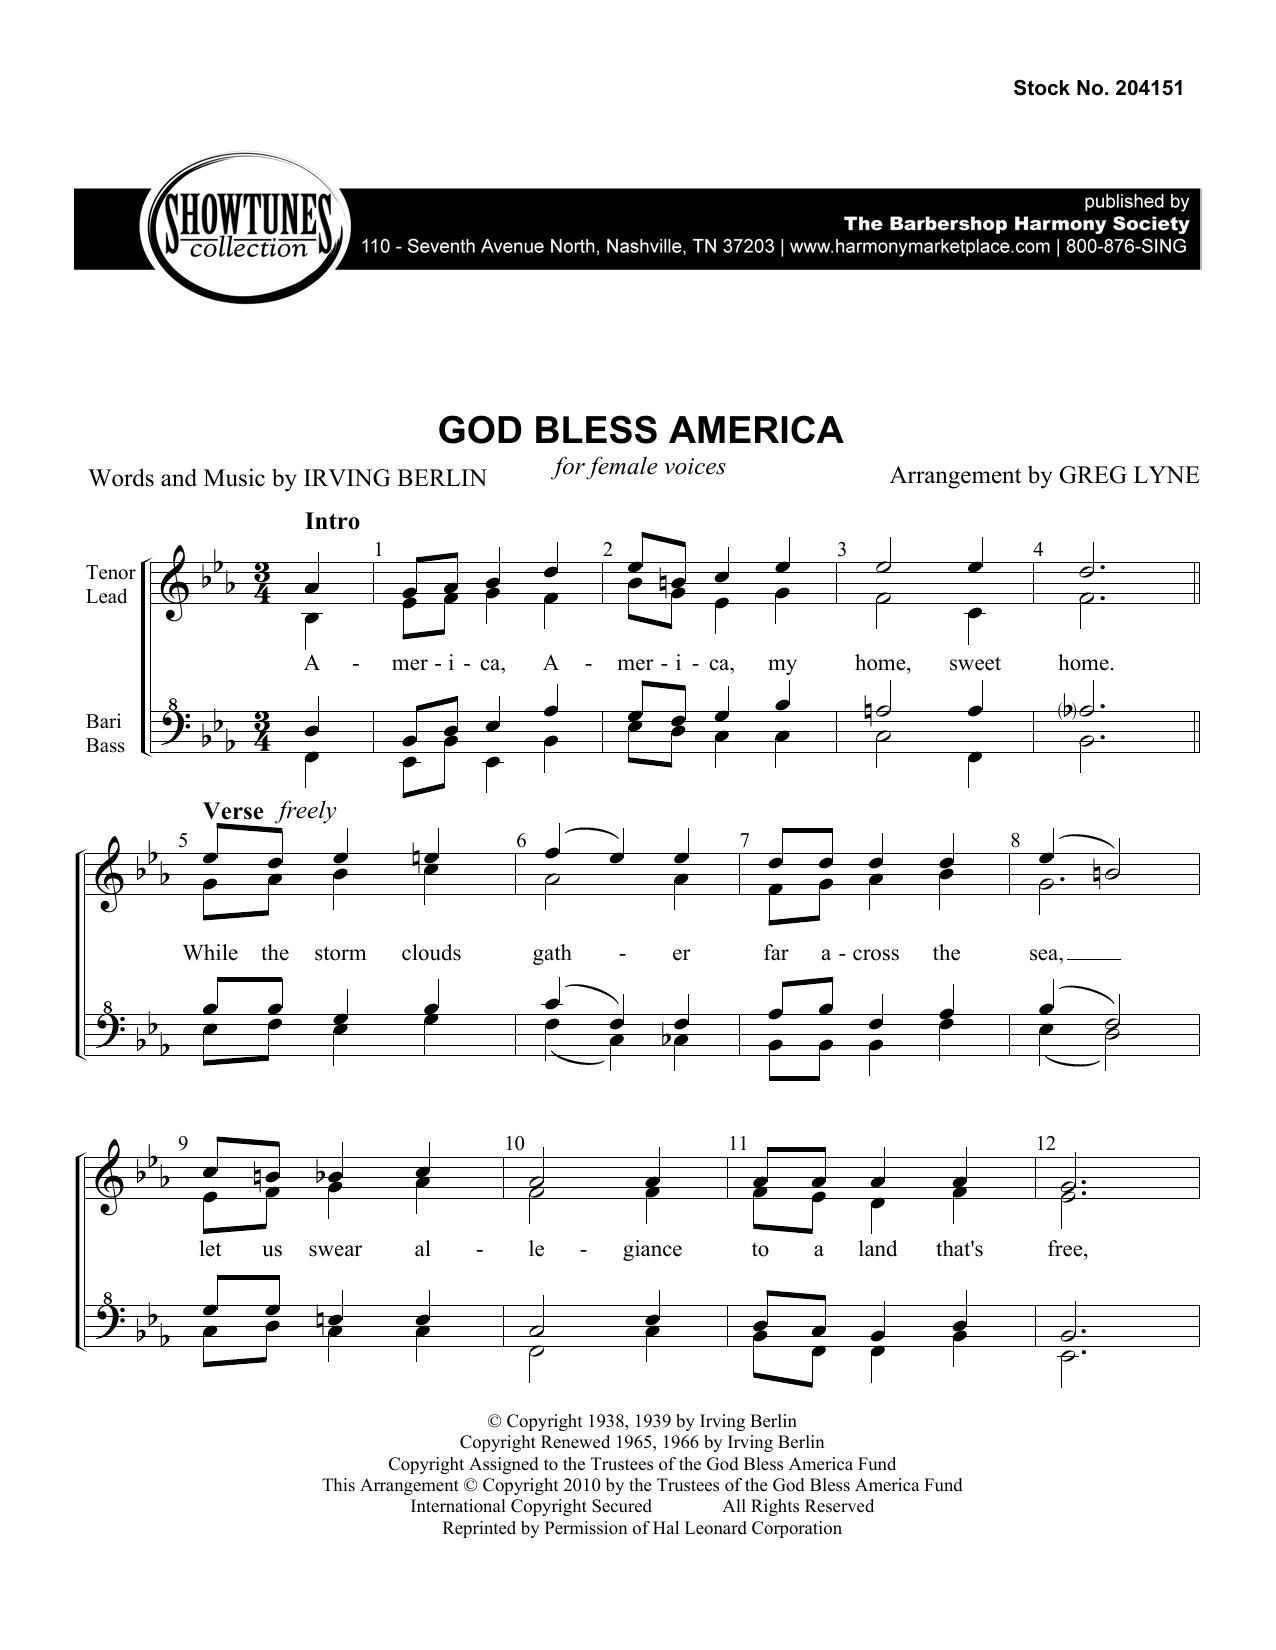 Irving Berlin God Bless America (arr. Greg Lyne) sheet music notes and chords arranged for SATB Choir